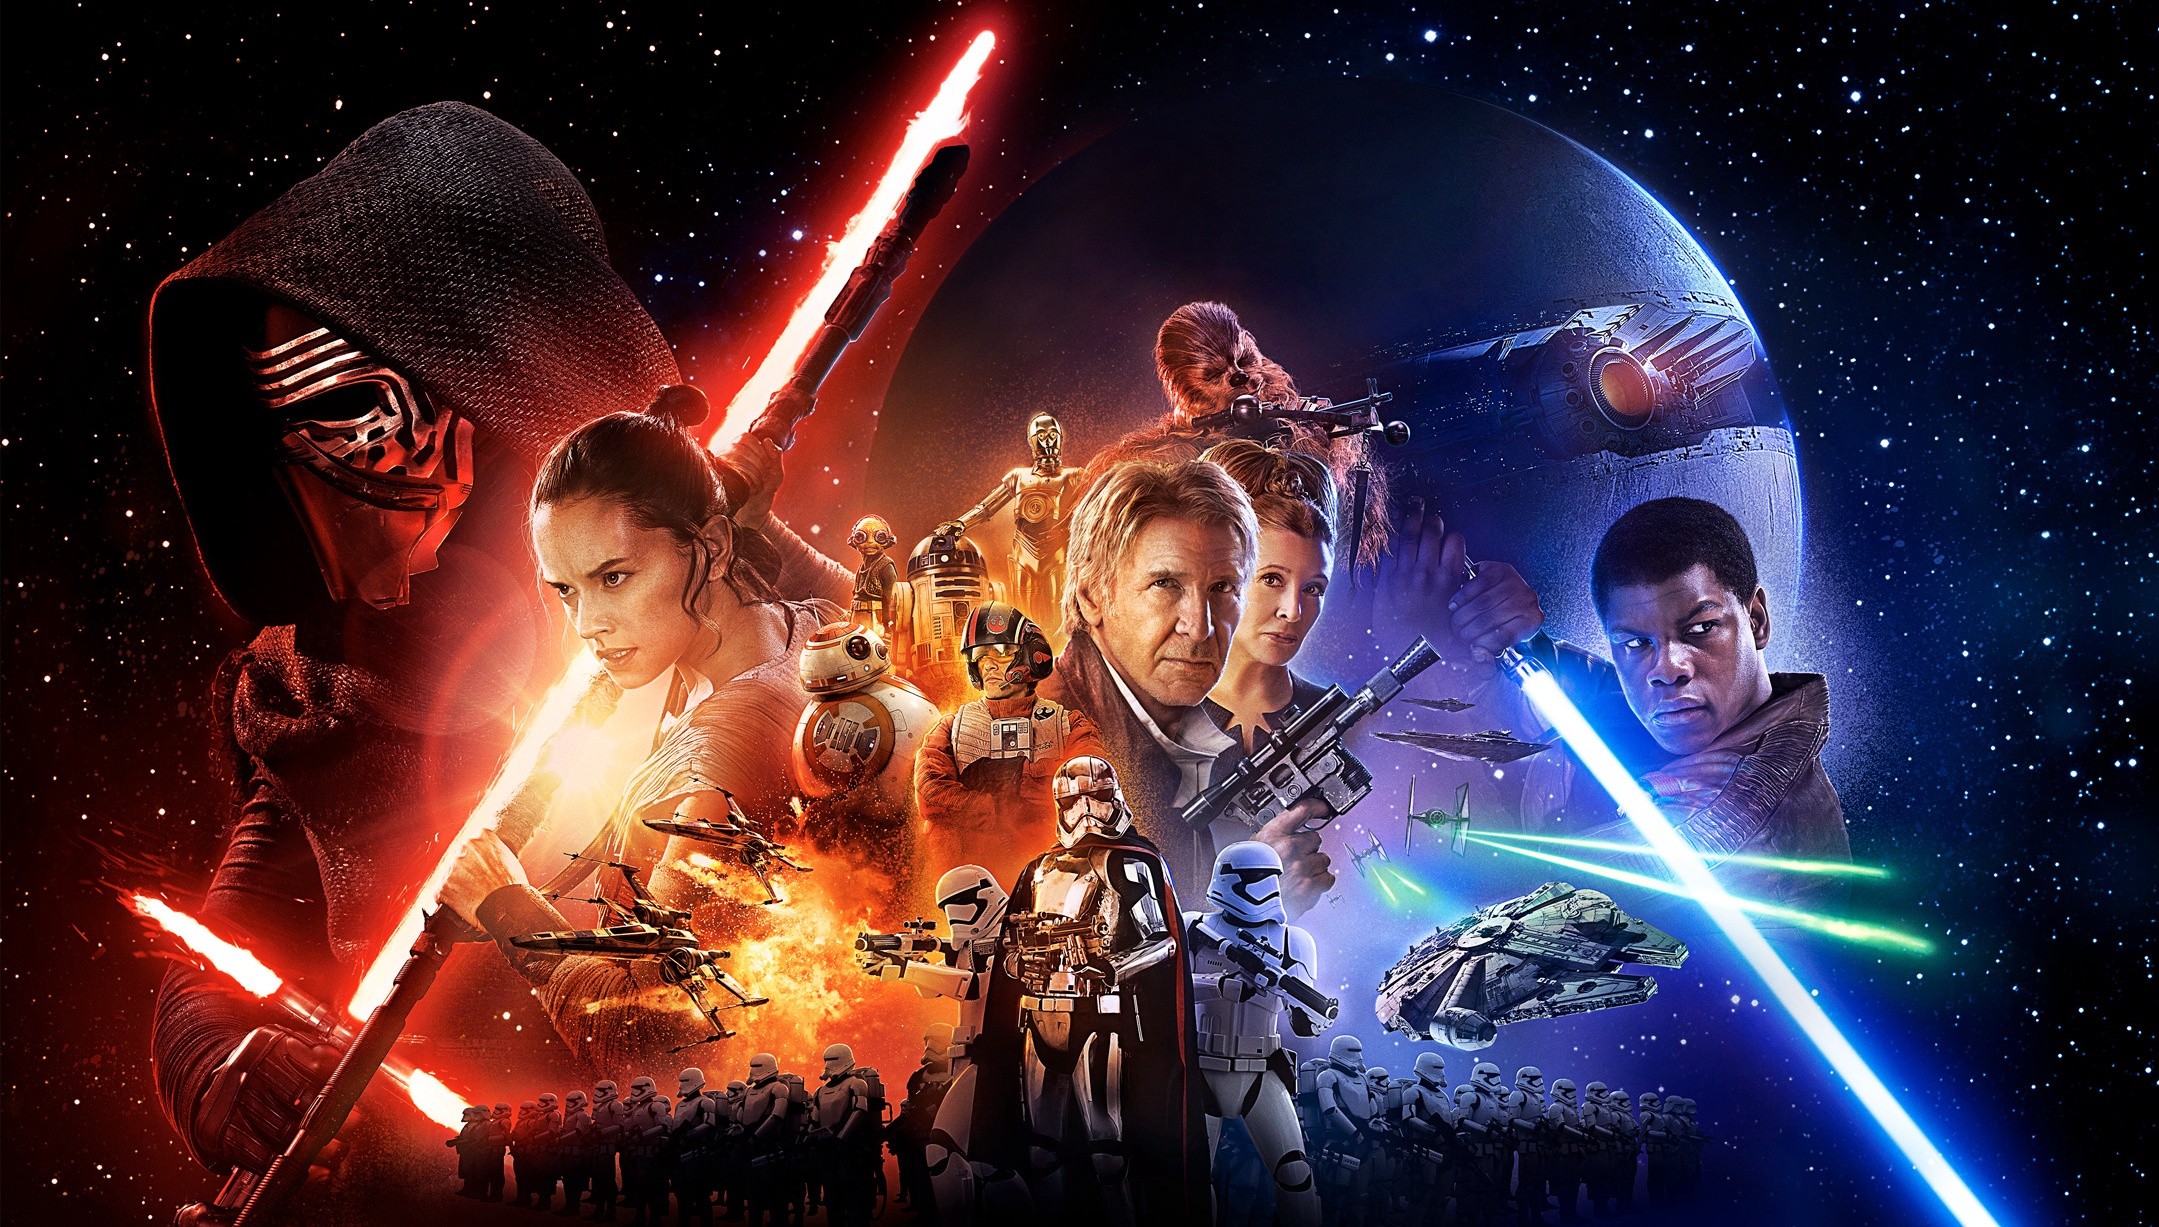 Star Wars Star Wars The Force Awakens Kylo Ren Han Solo BB 8 Chewbacca Captain Phasma R2 D2 C 3PO Lu 2159x1227